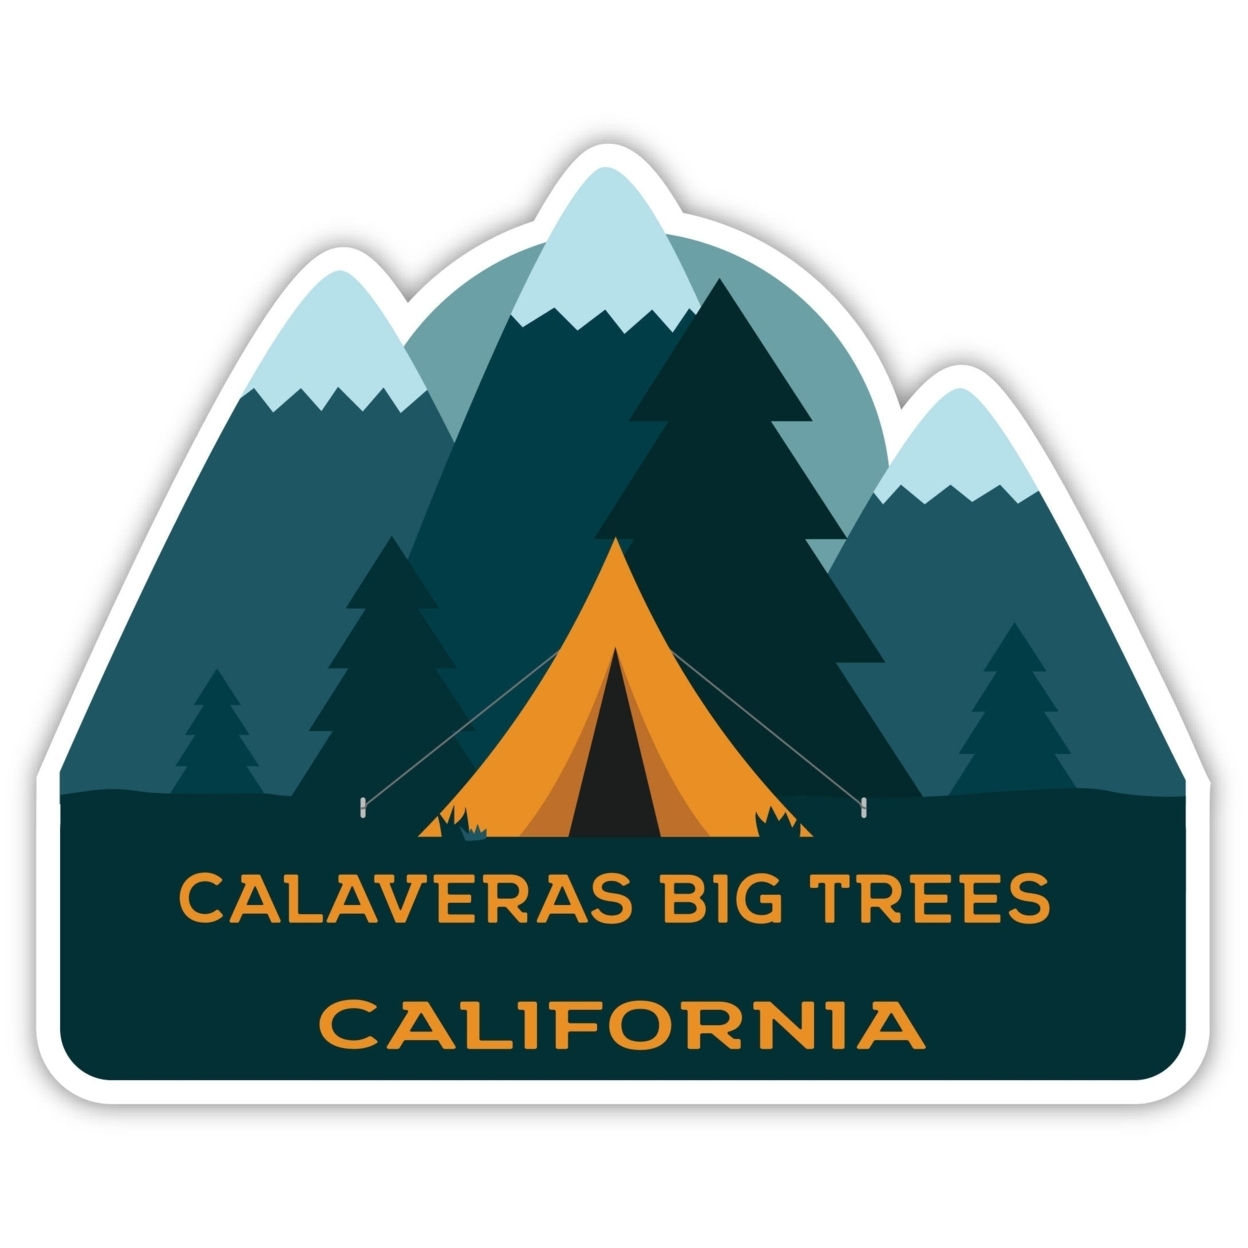 Calaveras Big Trees California Souvenir Decorative Stickers (Choose Theme And Size) - 4-Pack, 2-Inch, Tent